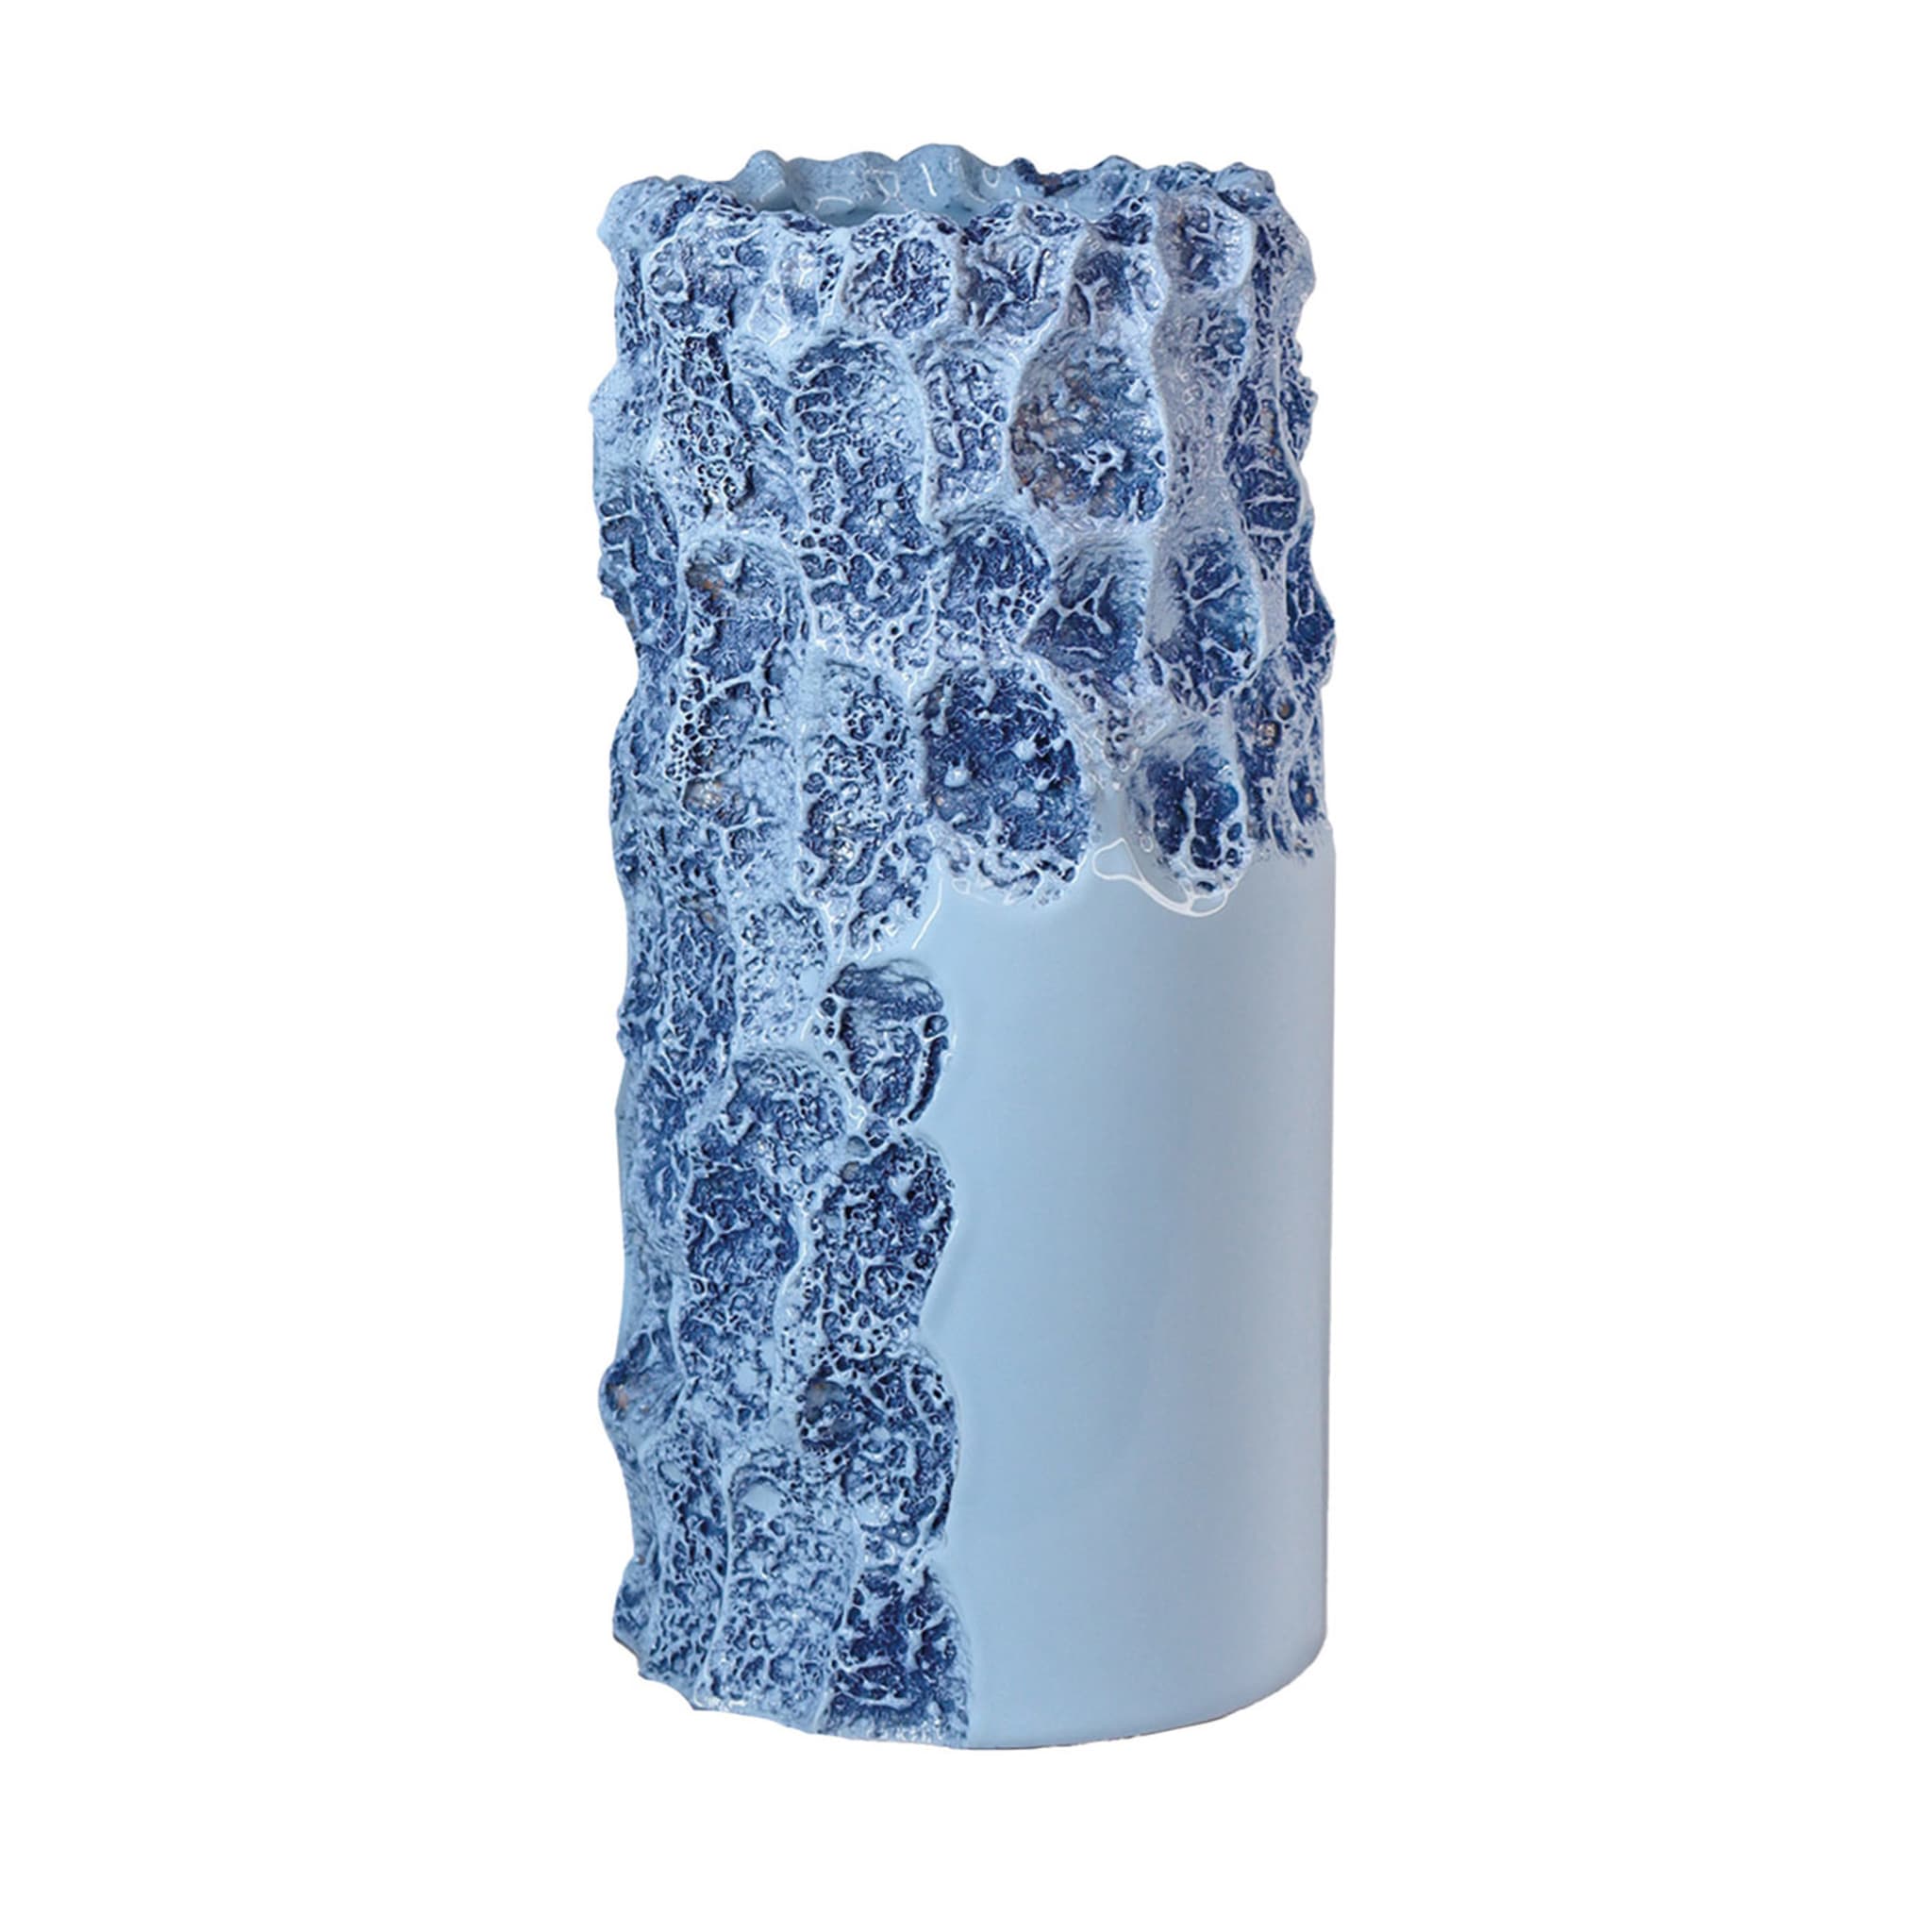 Oxymoron Light Blue Vase by Patricia Urquiola - Main view